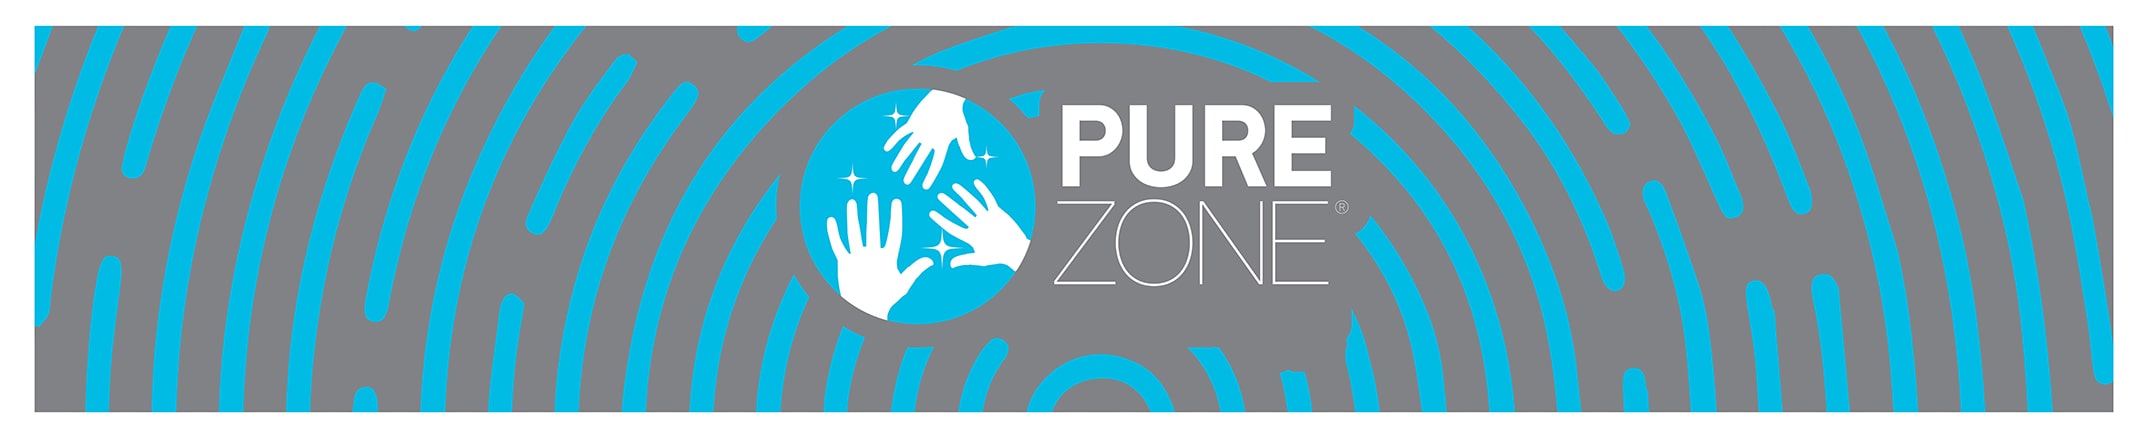 pure zone fingerprint